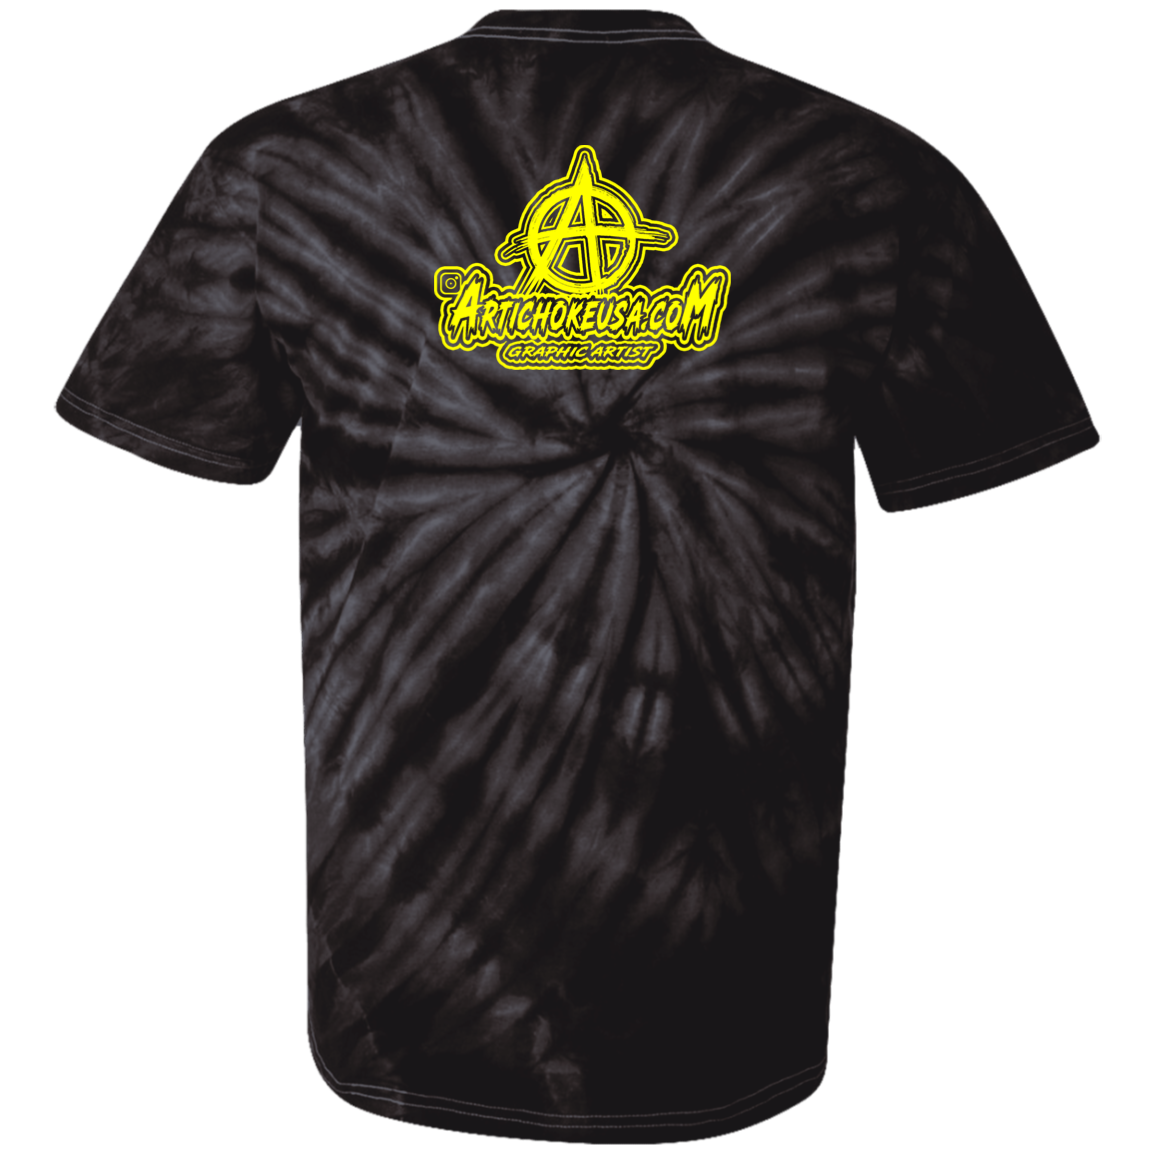 ArtichokeUSA Custom Design. I am the Stig. Han Solo / The Stig Fan Art. Youth Tie Dye T-Shirt